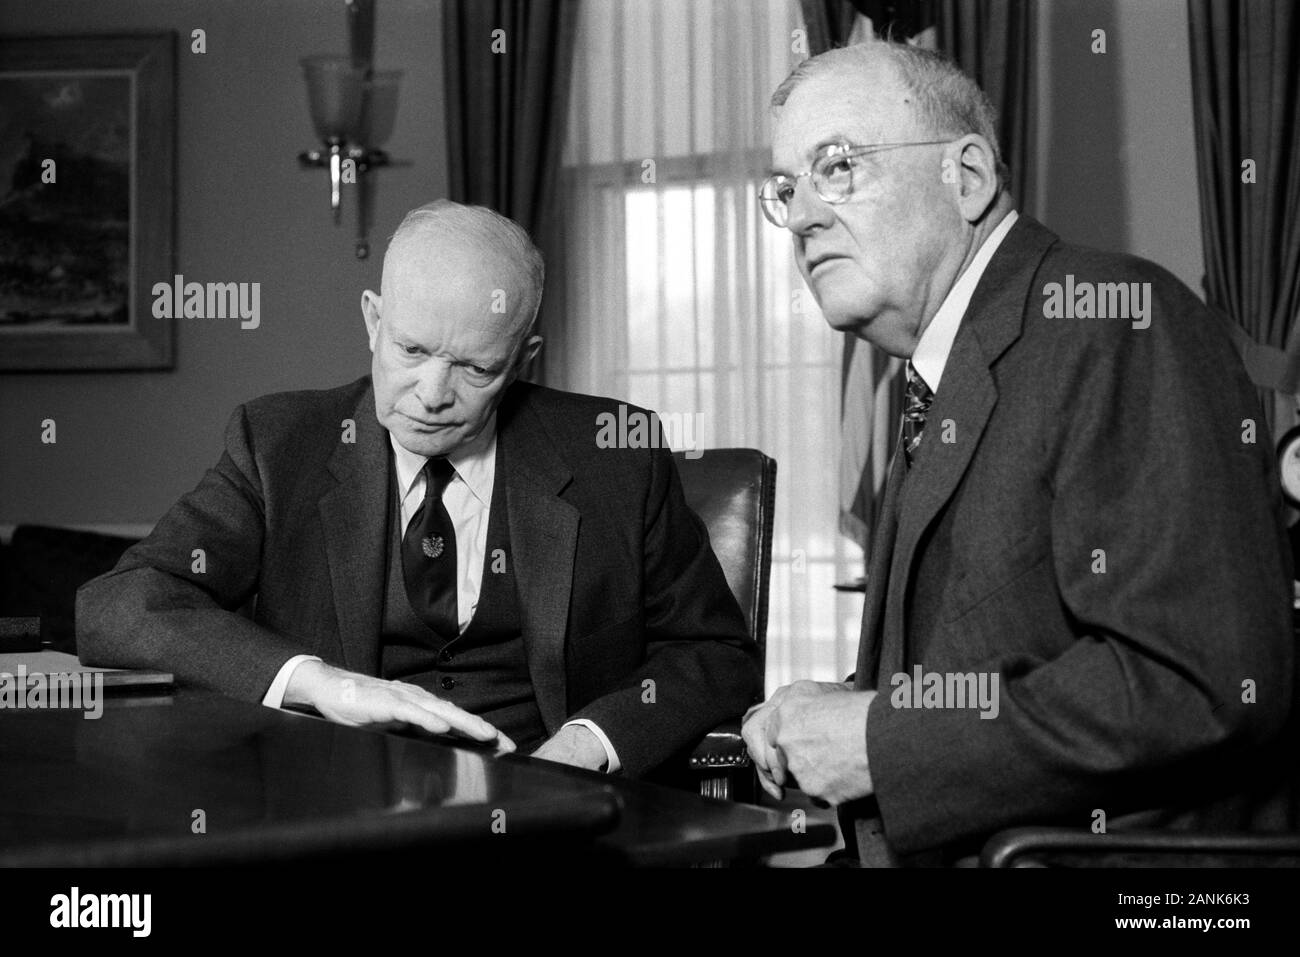 Us-Präsident Dwight D. Eisenhower mit US-Außenminister John Foster Dulles (rechts) im Oval Office des Weißen Hauses, Washington, D.C., USA, Foto: Marion S. Trikosko, 11. Dezember 1957 Stockfoto